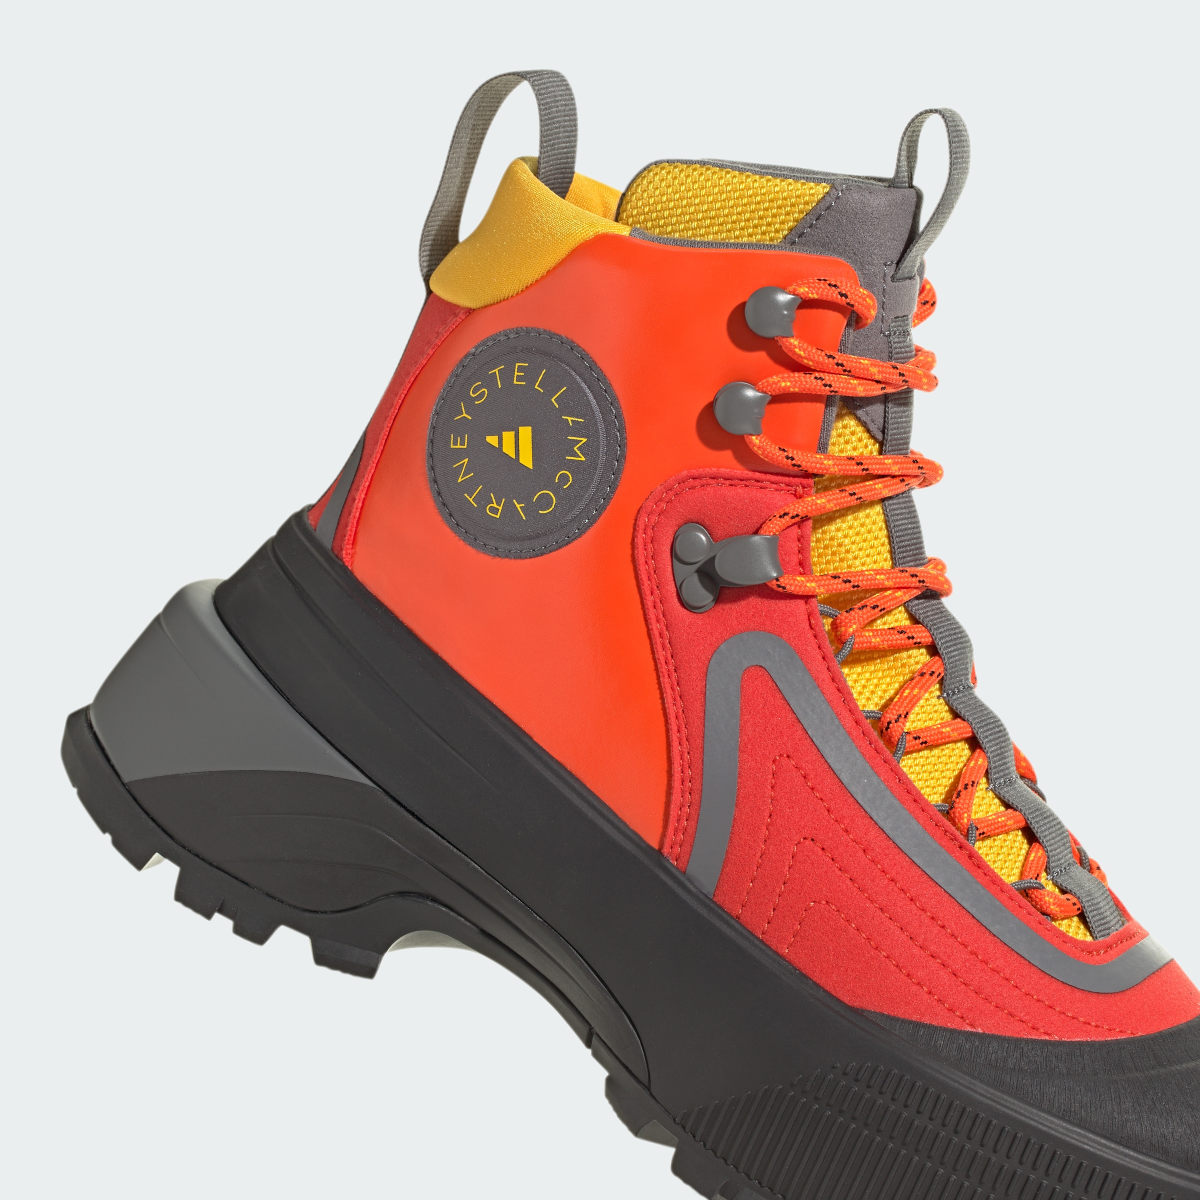 Adidas by Stella McCartney x Terrex Hiking Boots. 9